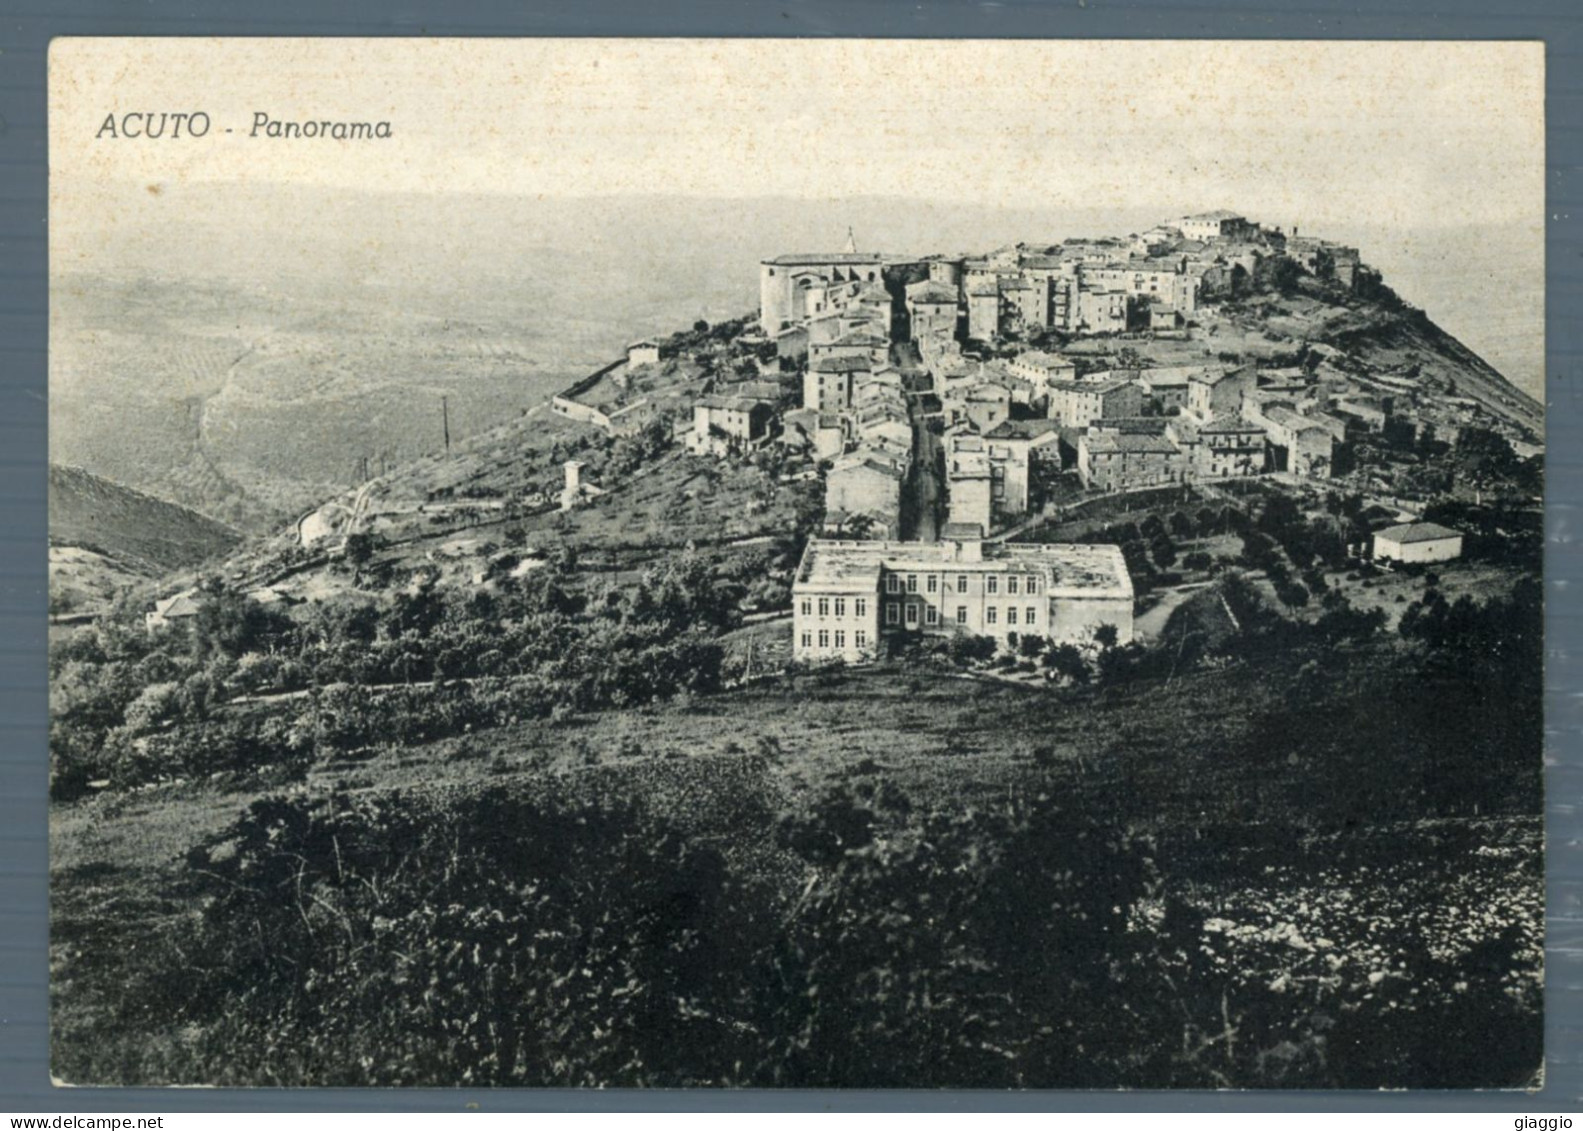 °°° Cartolina - Acuto Panorama - Viaggiata °°° - Frosinone